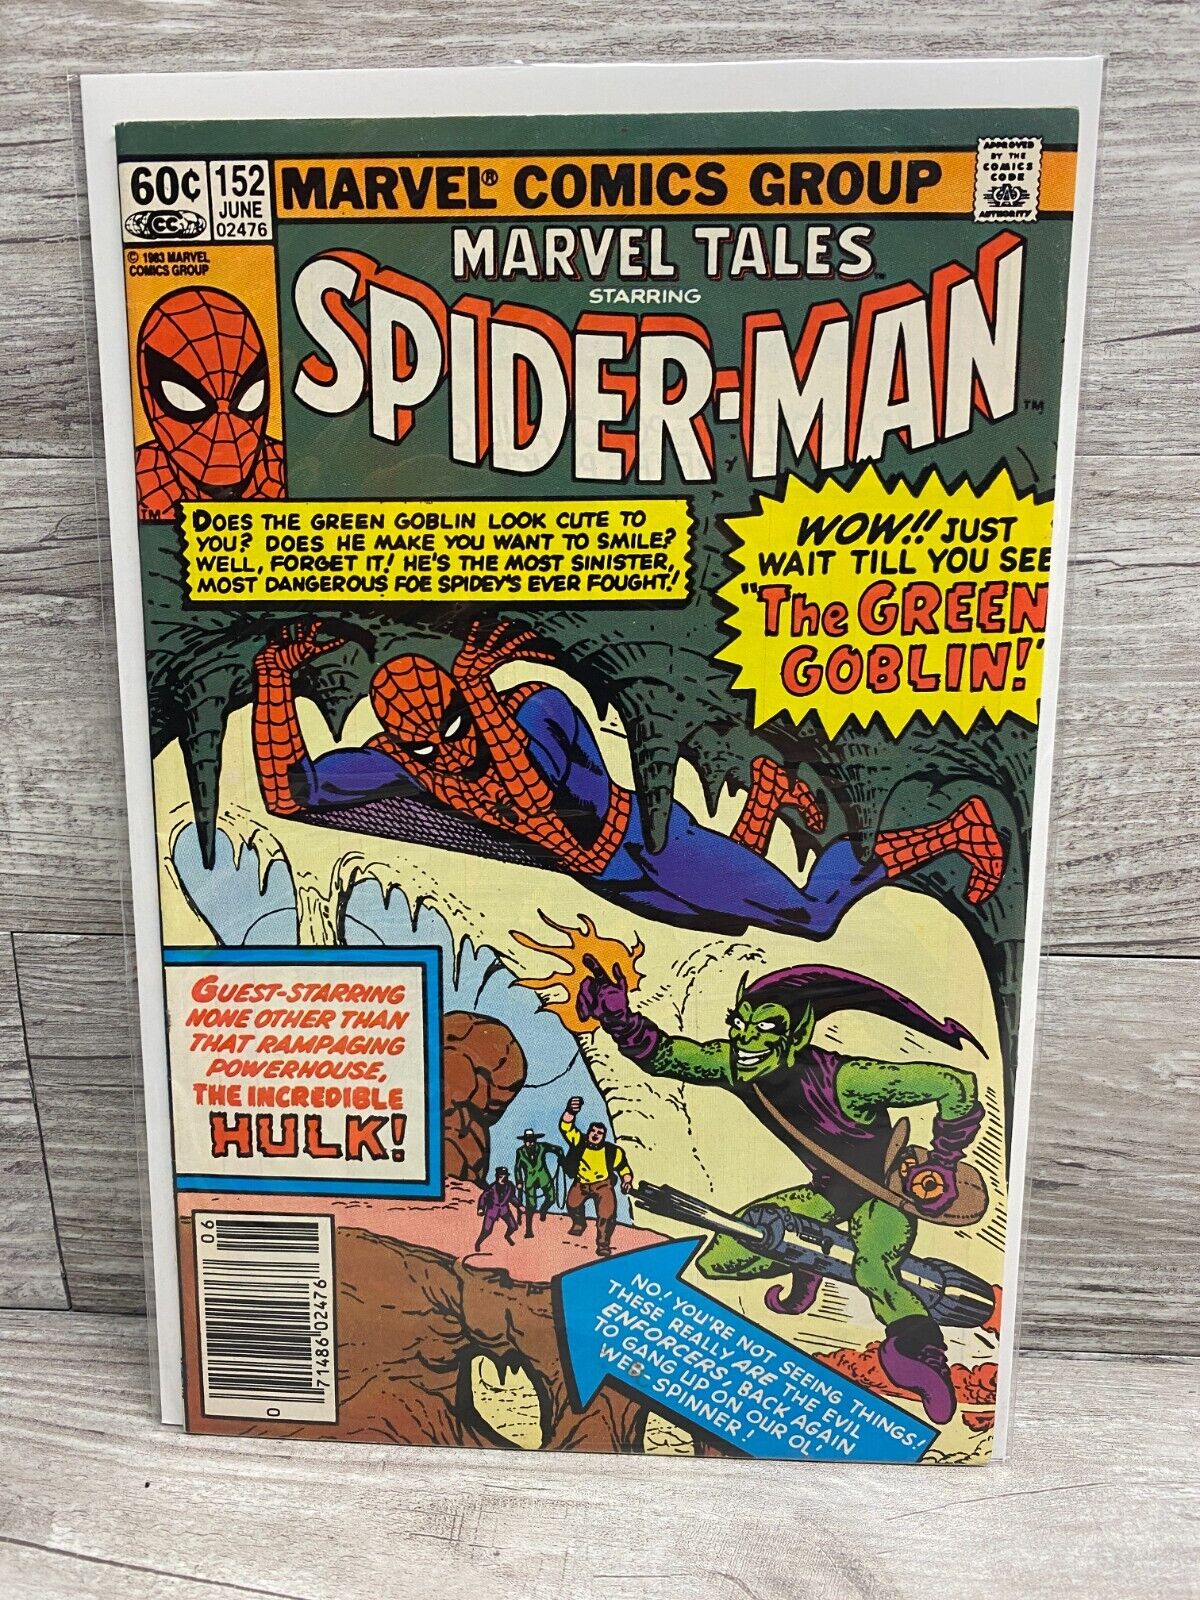 Marvel Tales #152 June Spider-Man Marvel Comics 1983 Bronze Age Comic Book